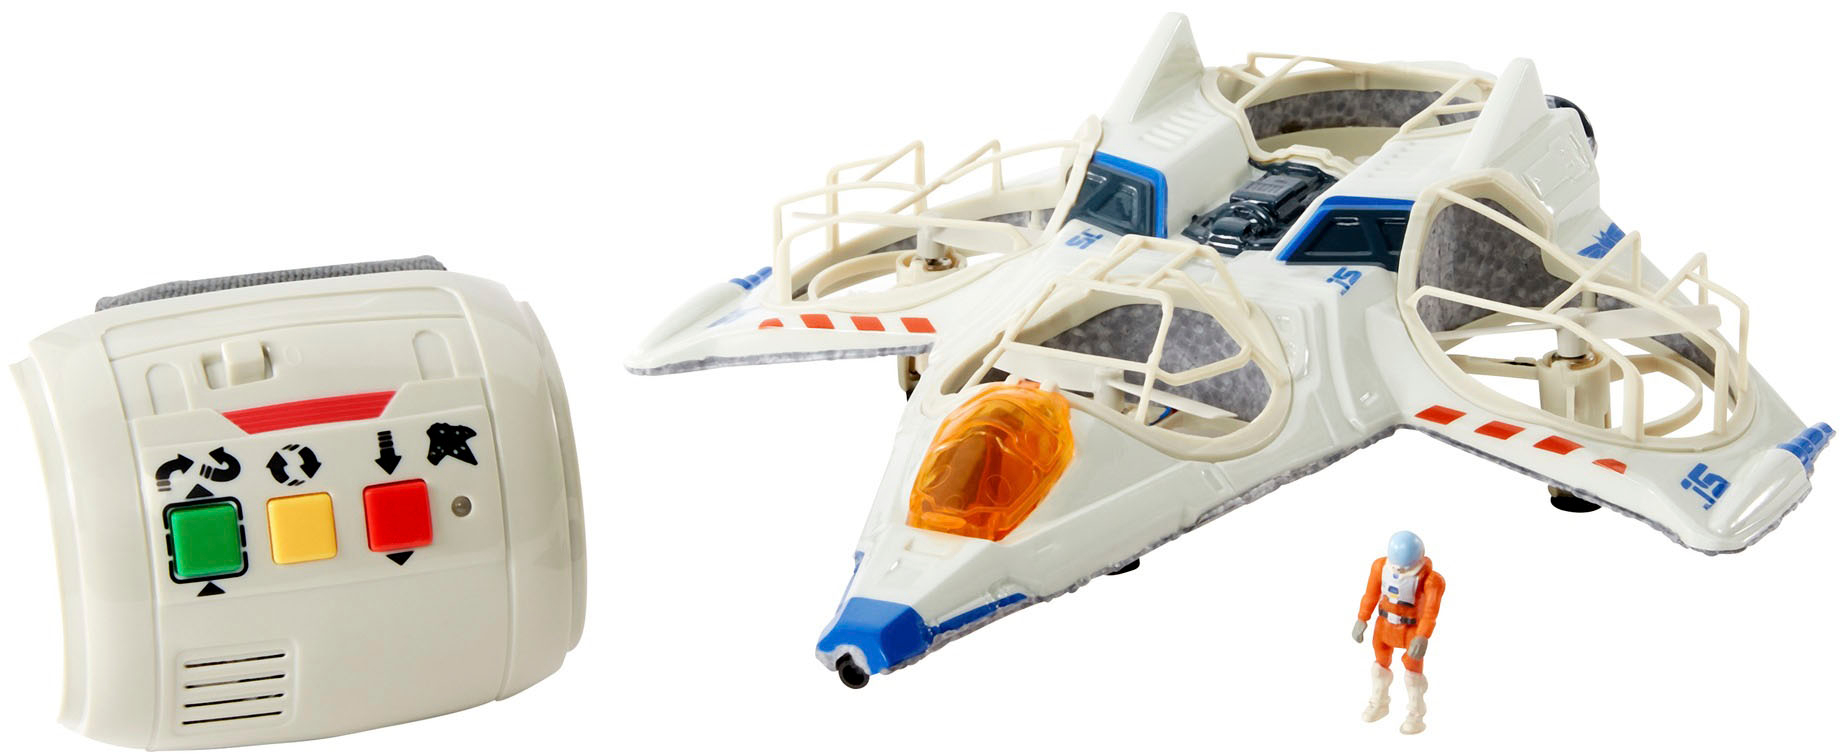 Disney - RC Lightyear Space Mission Explorer Vehicle - White